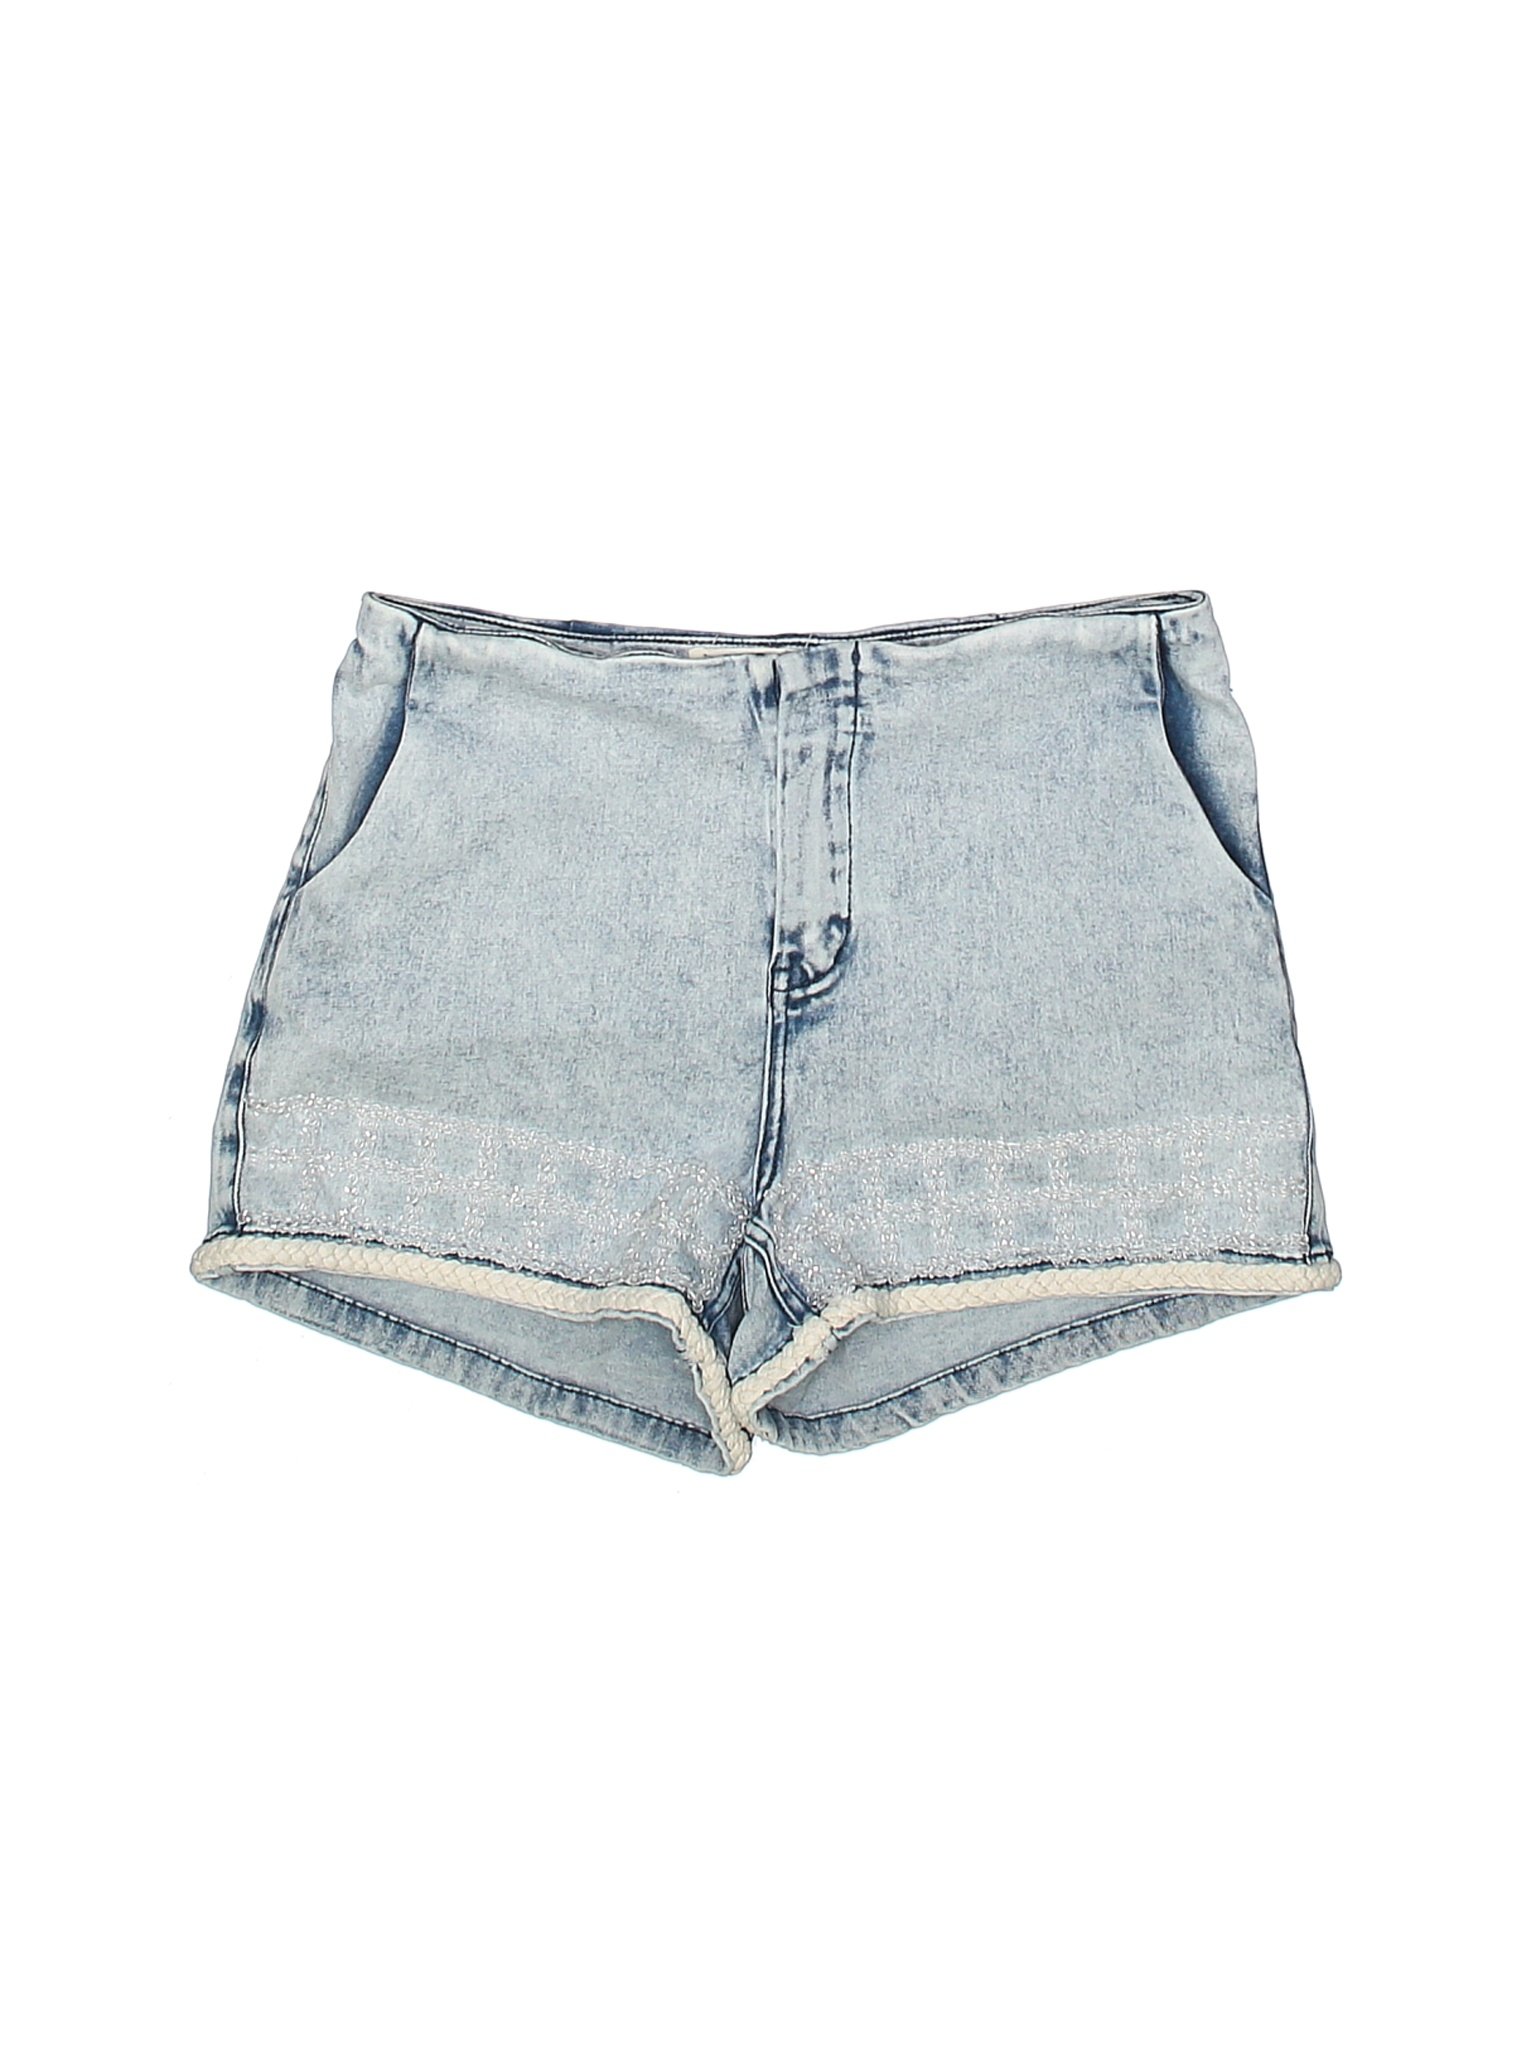 Assorted Brands Women Blue Denim Shorts 27W | eBay